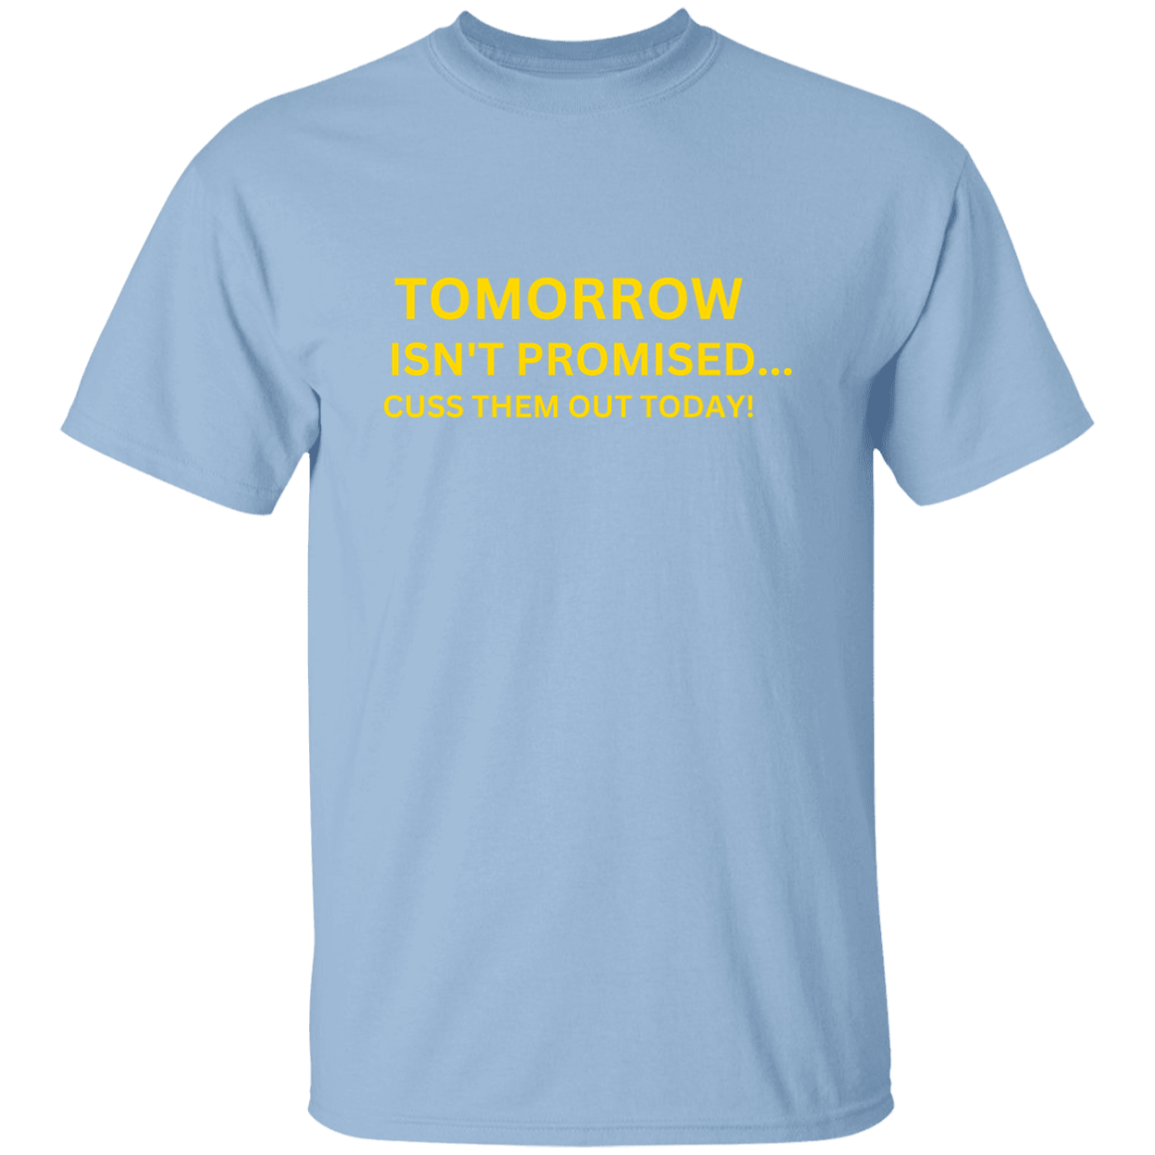 Tomorrow Isn't Promised T-Shirt, Funny Quote Shirts, Feminist Shirt, Novelty T-shirt, Sarcastic T-shirt